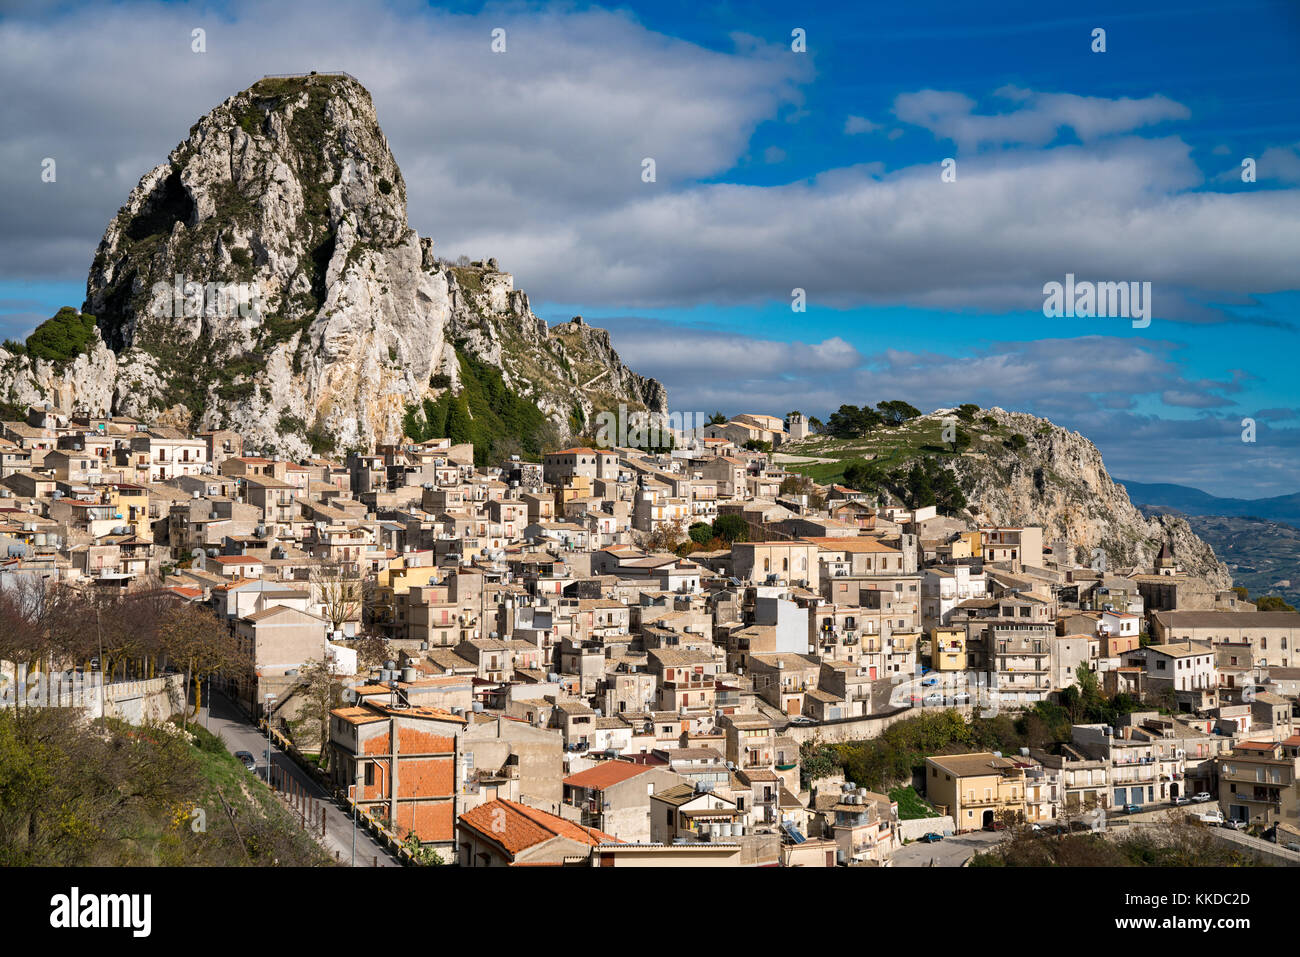 Caltabellotta,Agrigento,Sicily,Italy,11.28.2017. Stock Photo